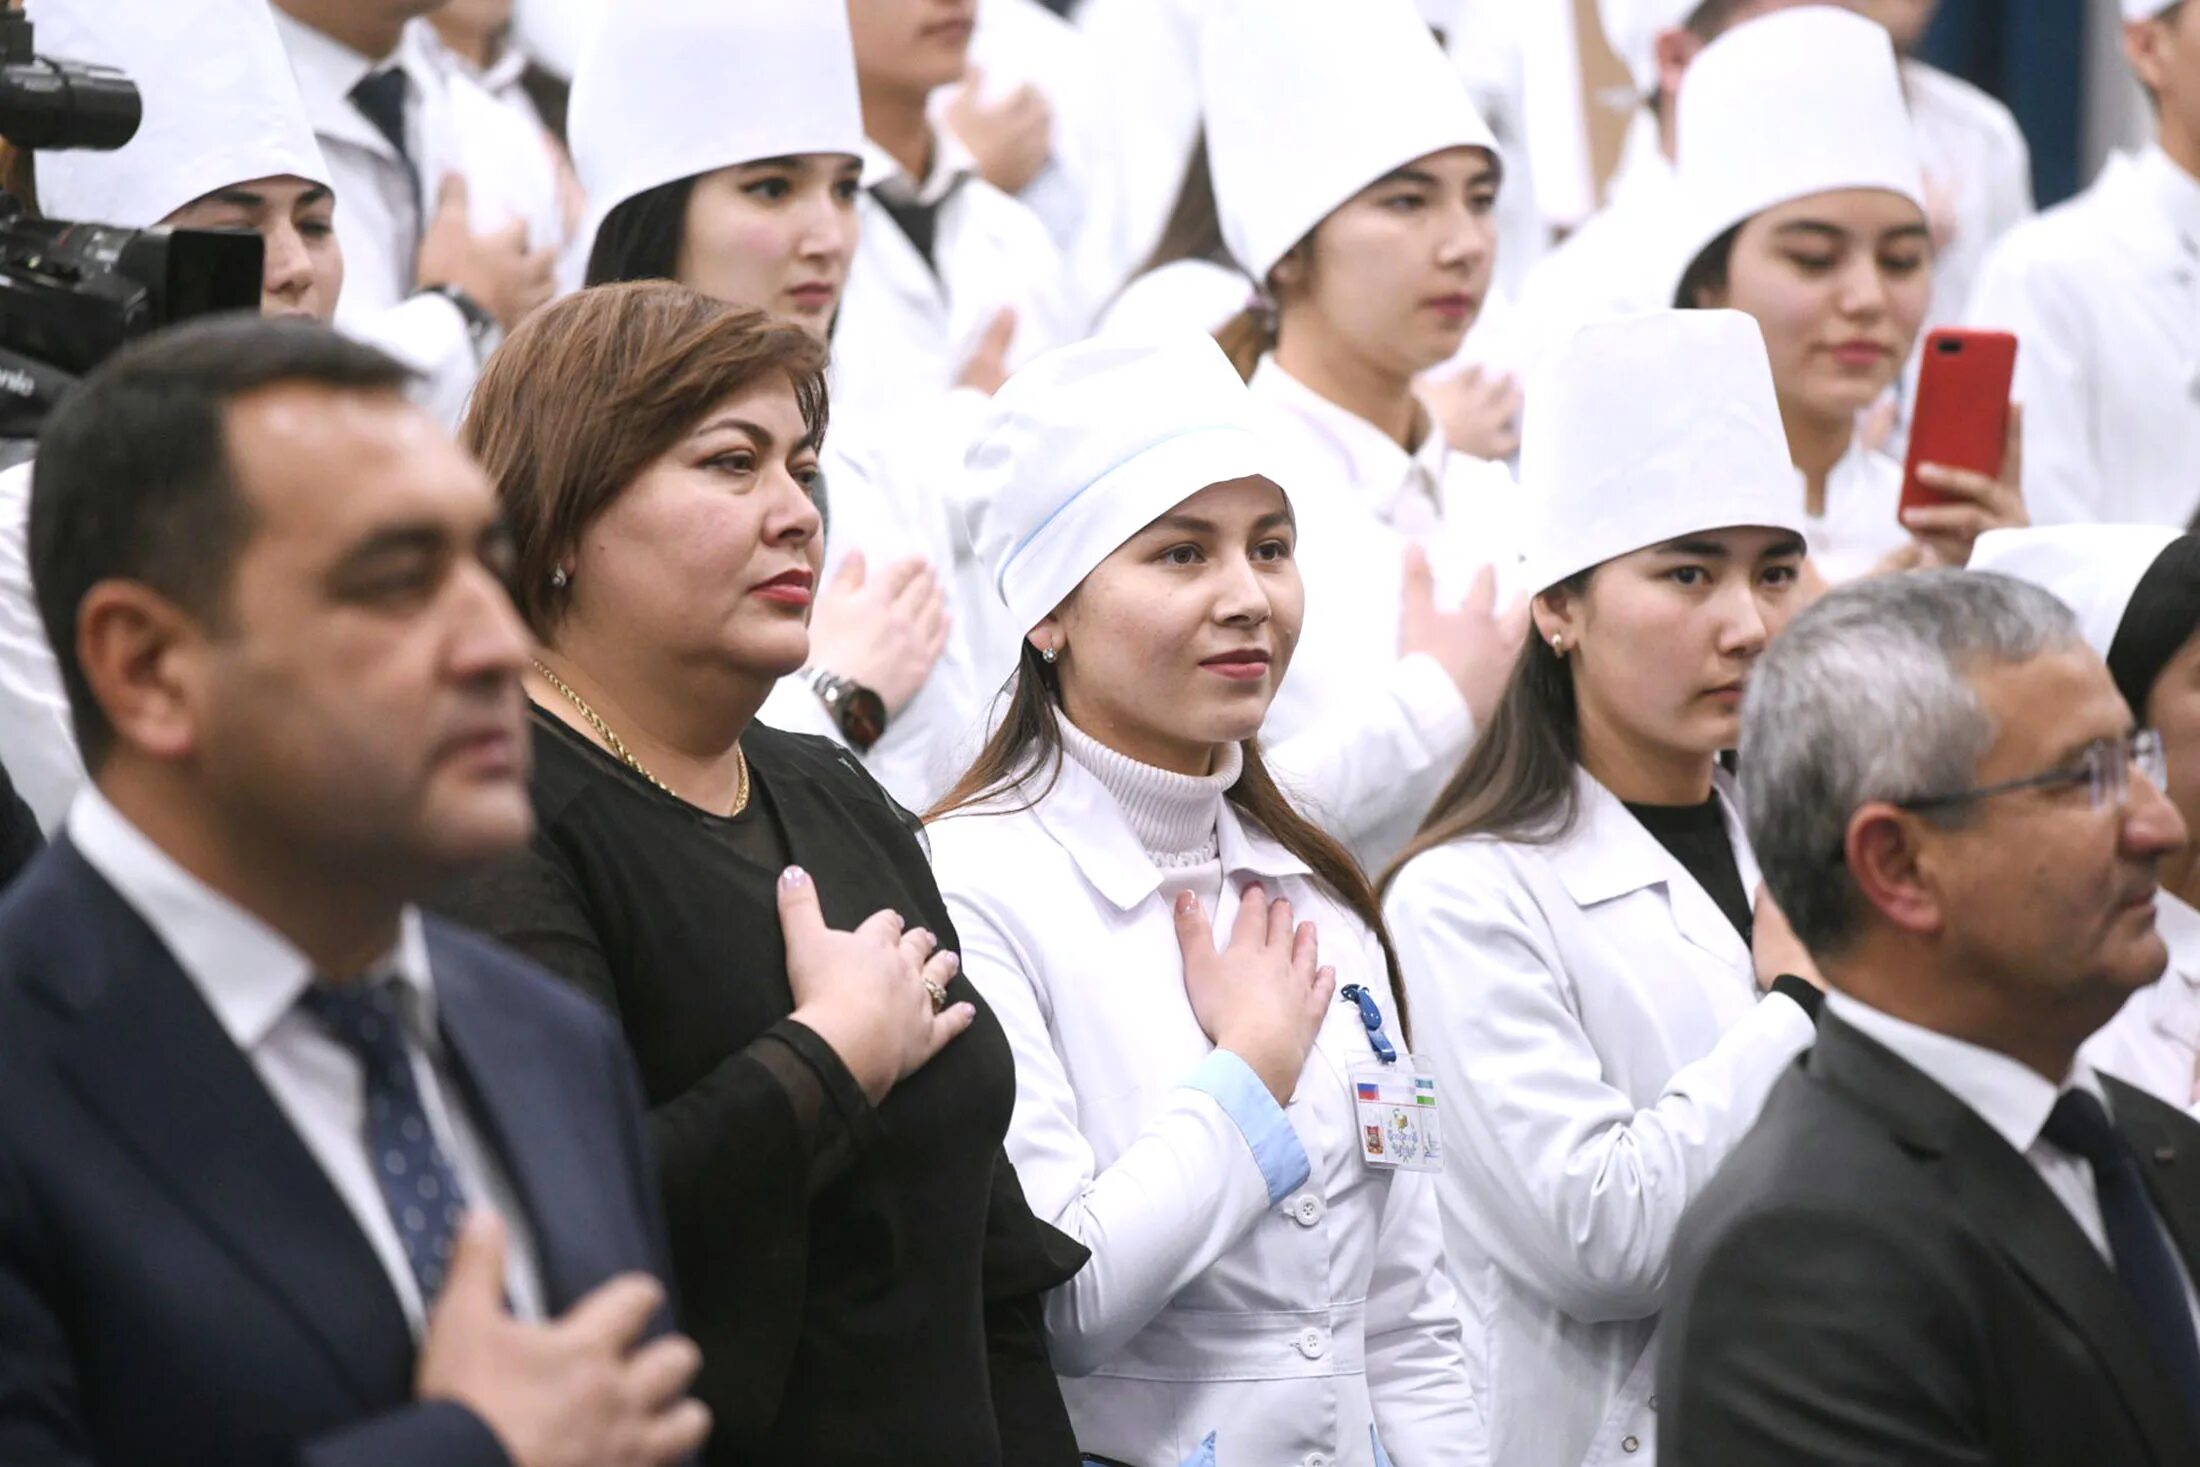 Медики клятва Гиппократа. Врачи дают клятву. Студенты Узбекистана. Студенты-медики клятву Гиппократа. Клятва врача 12